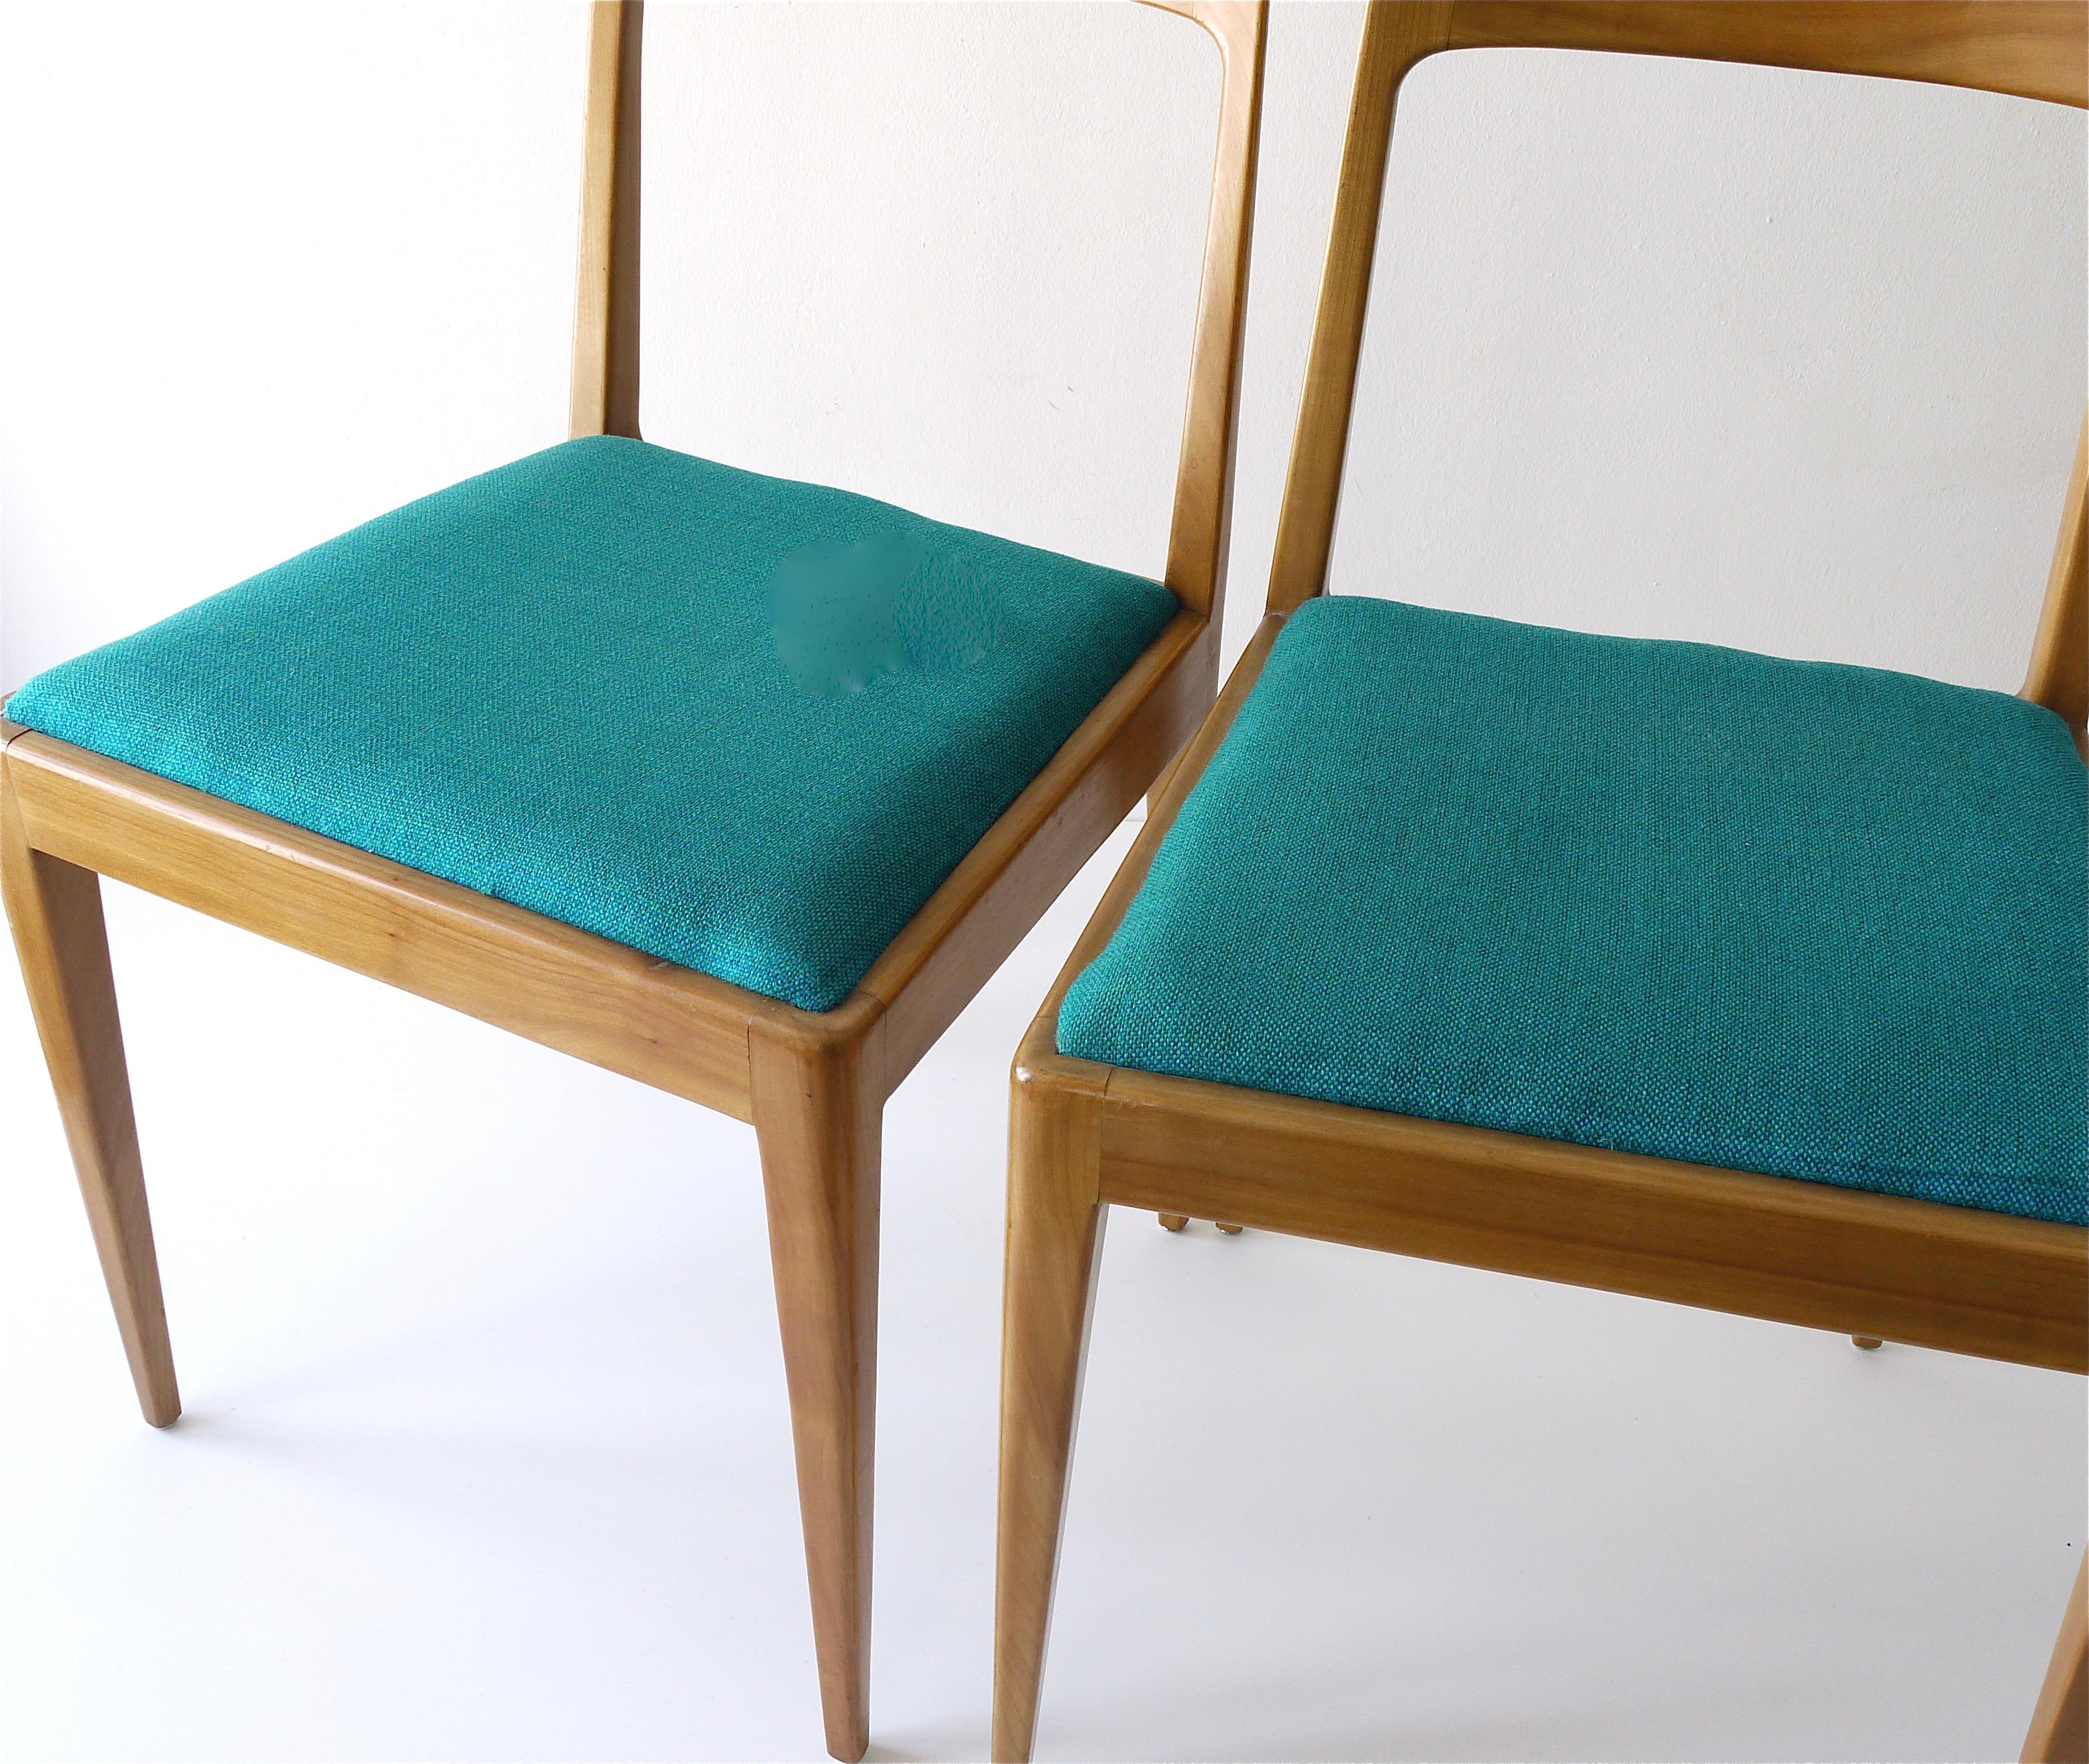 Four Carl Aubock Midcentury Walnut Chairs A7, Vienna, Austria, 1950s For Sale 11